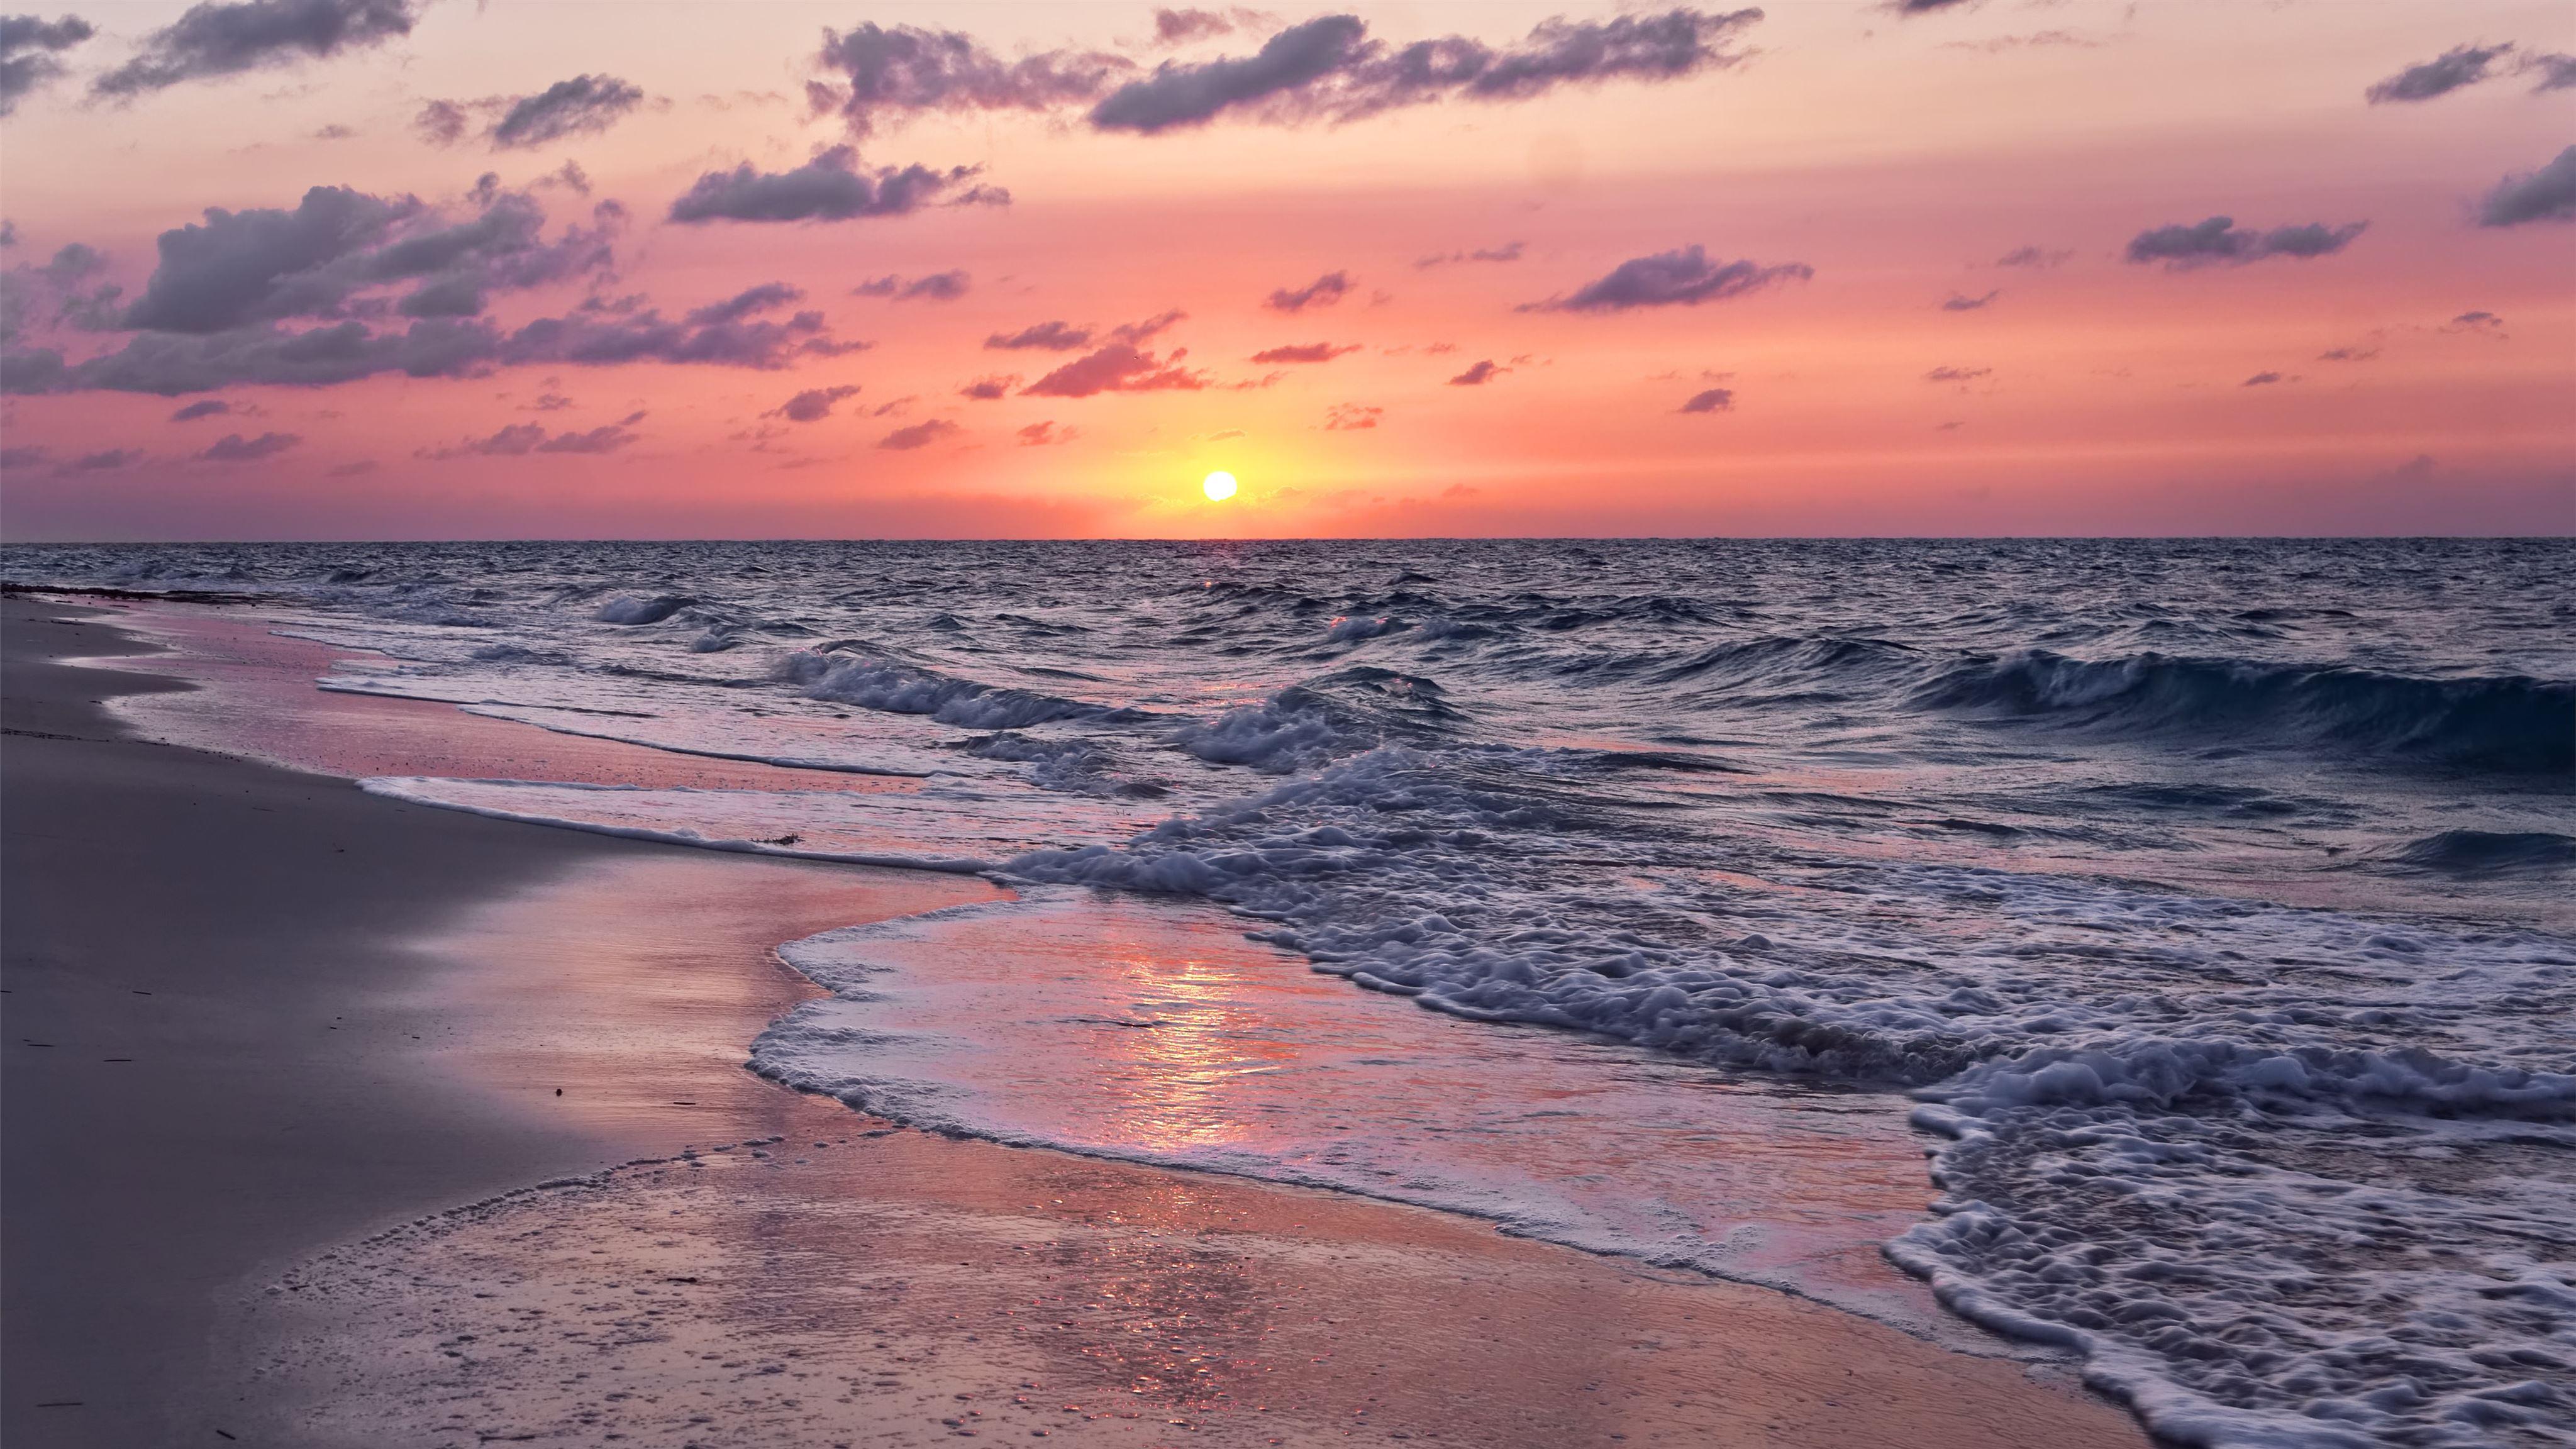 Bahamas Sunset Wallpapers - Top Free Bahamas Sunset Backgrounds ...